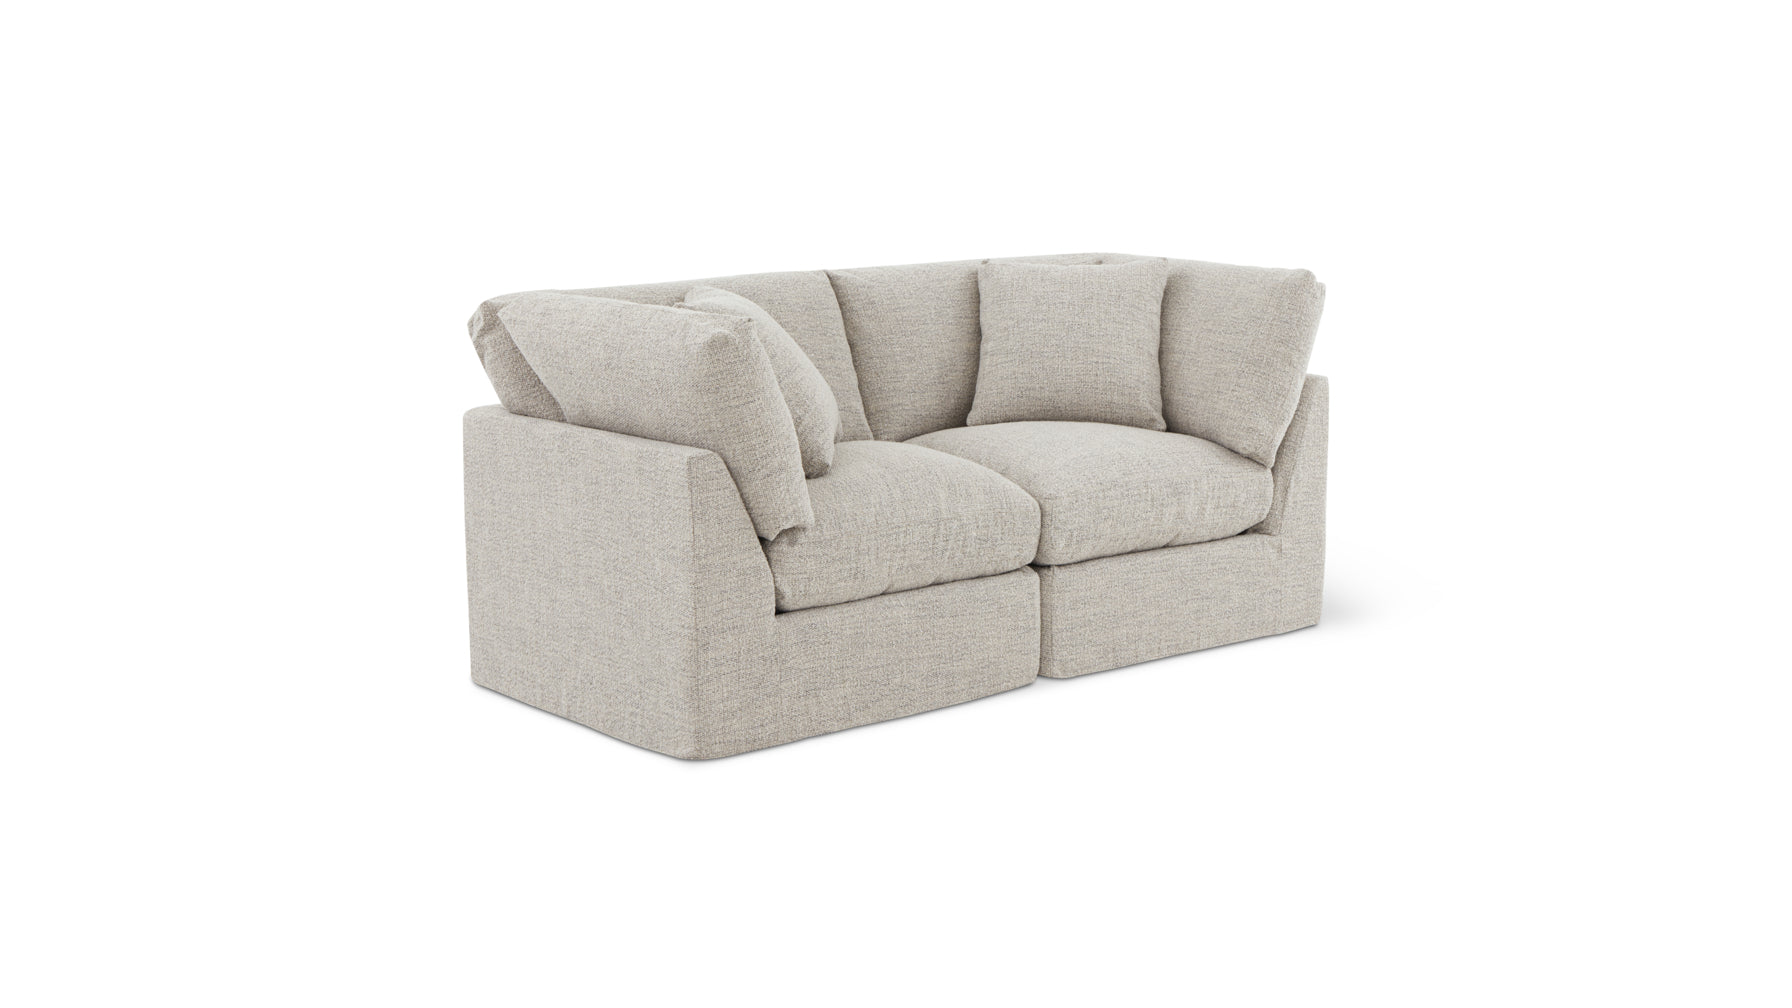 Get Together™ 2-Piece Modular Sofa, Standard, Oatmeal - Image 2